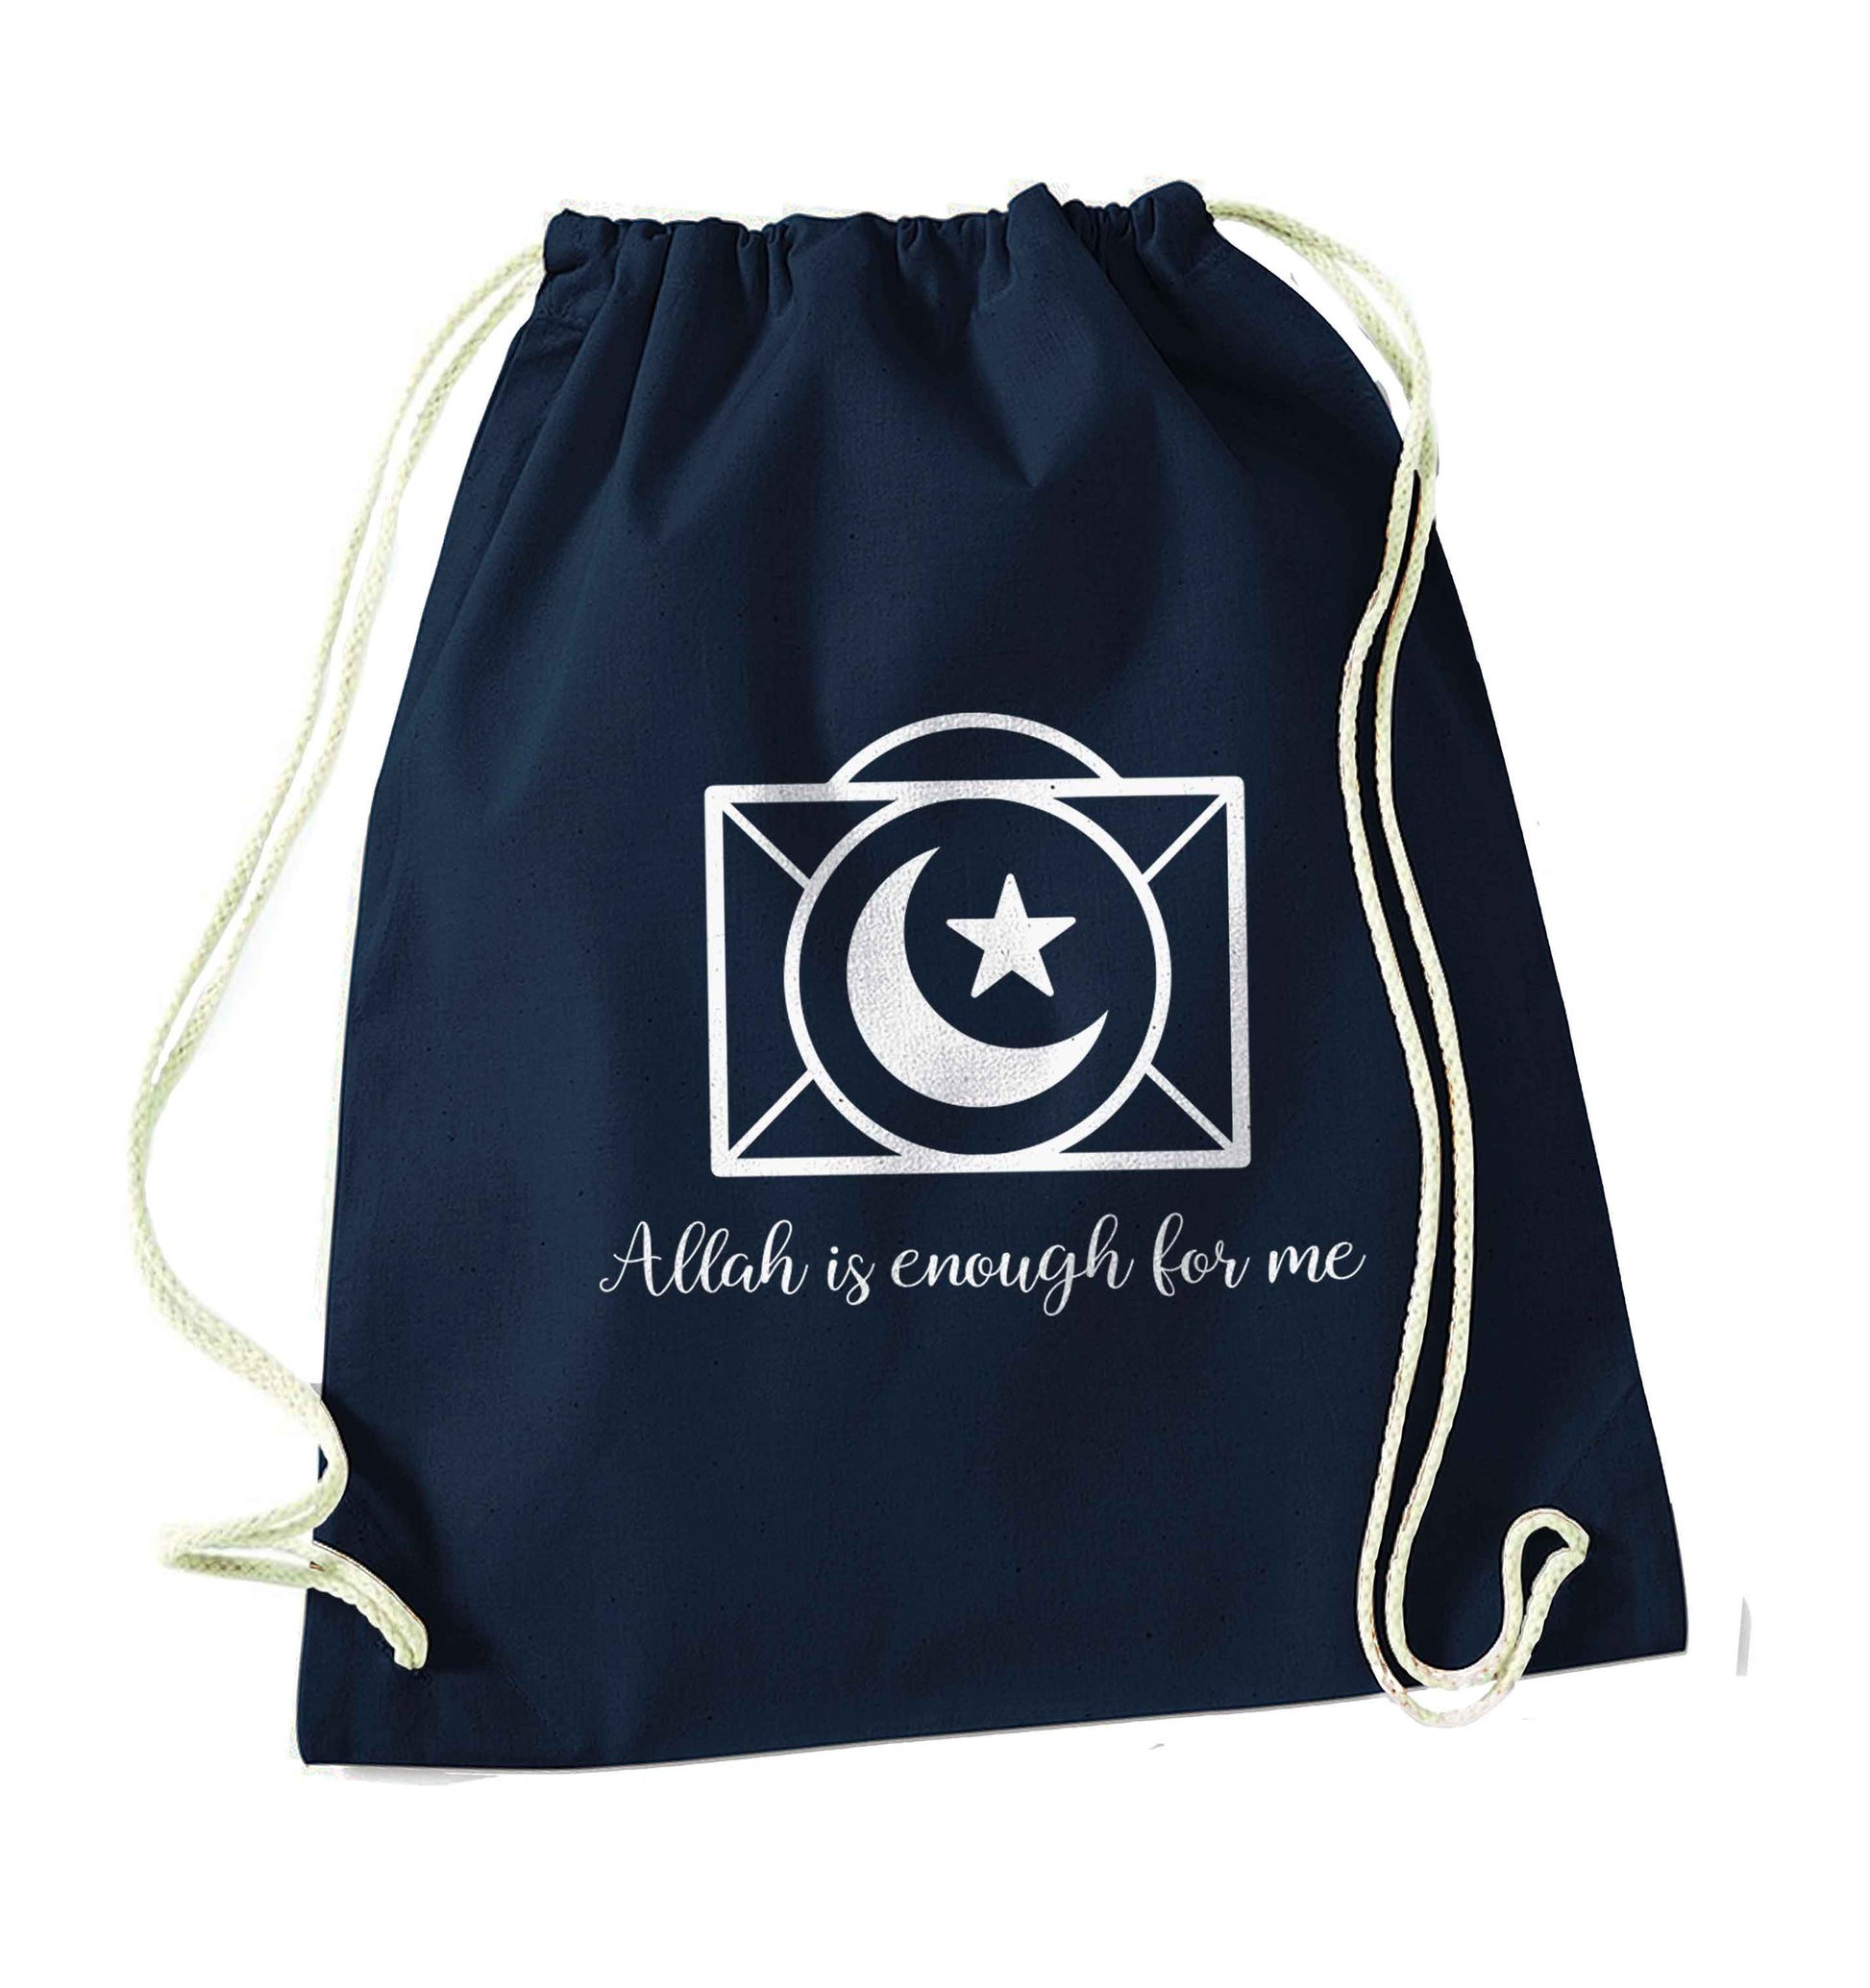 Allah is enough for me navy drawstring bag